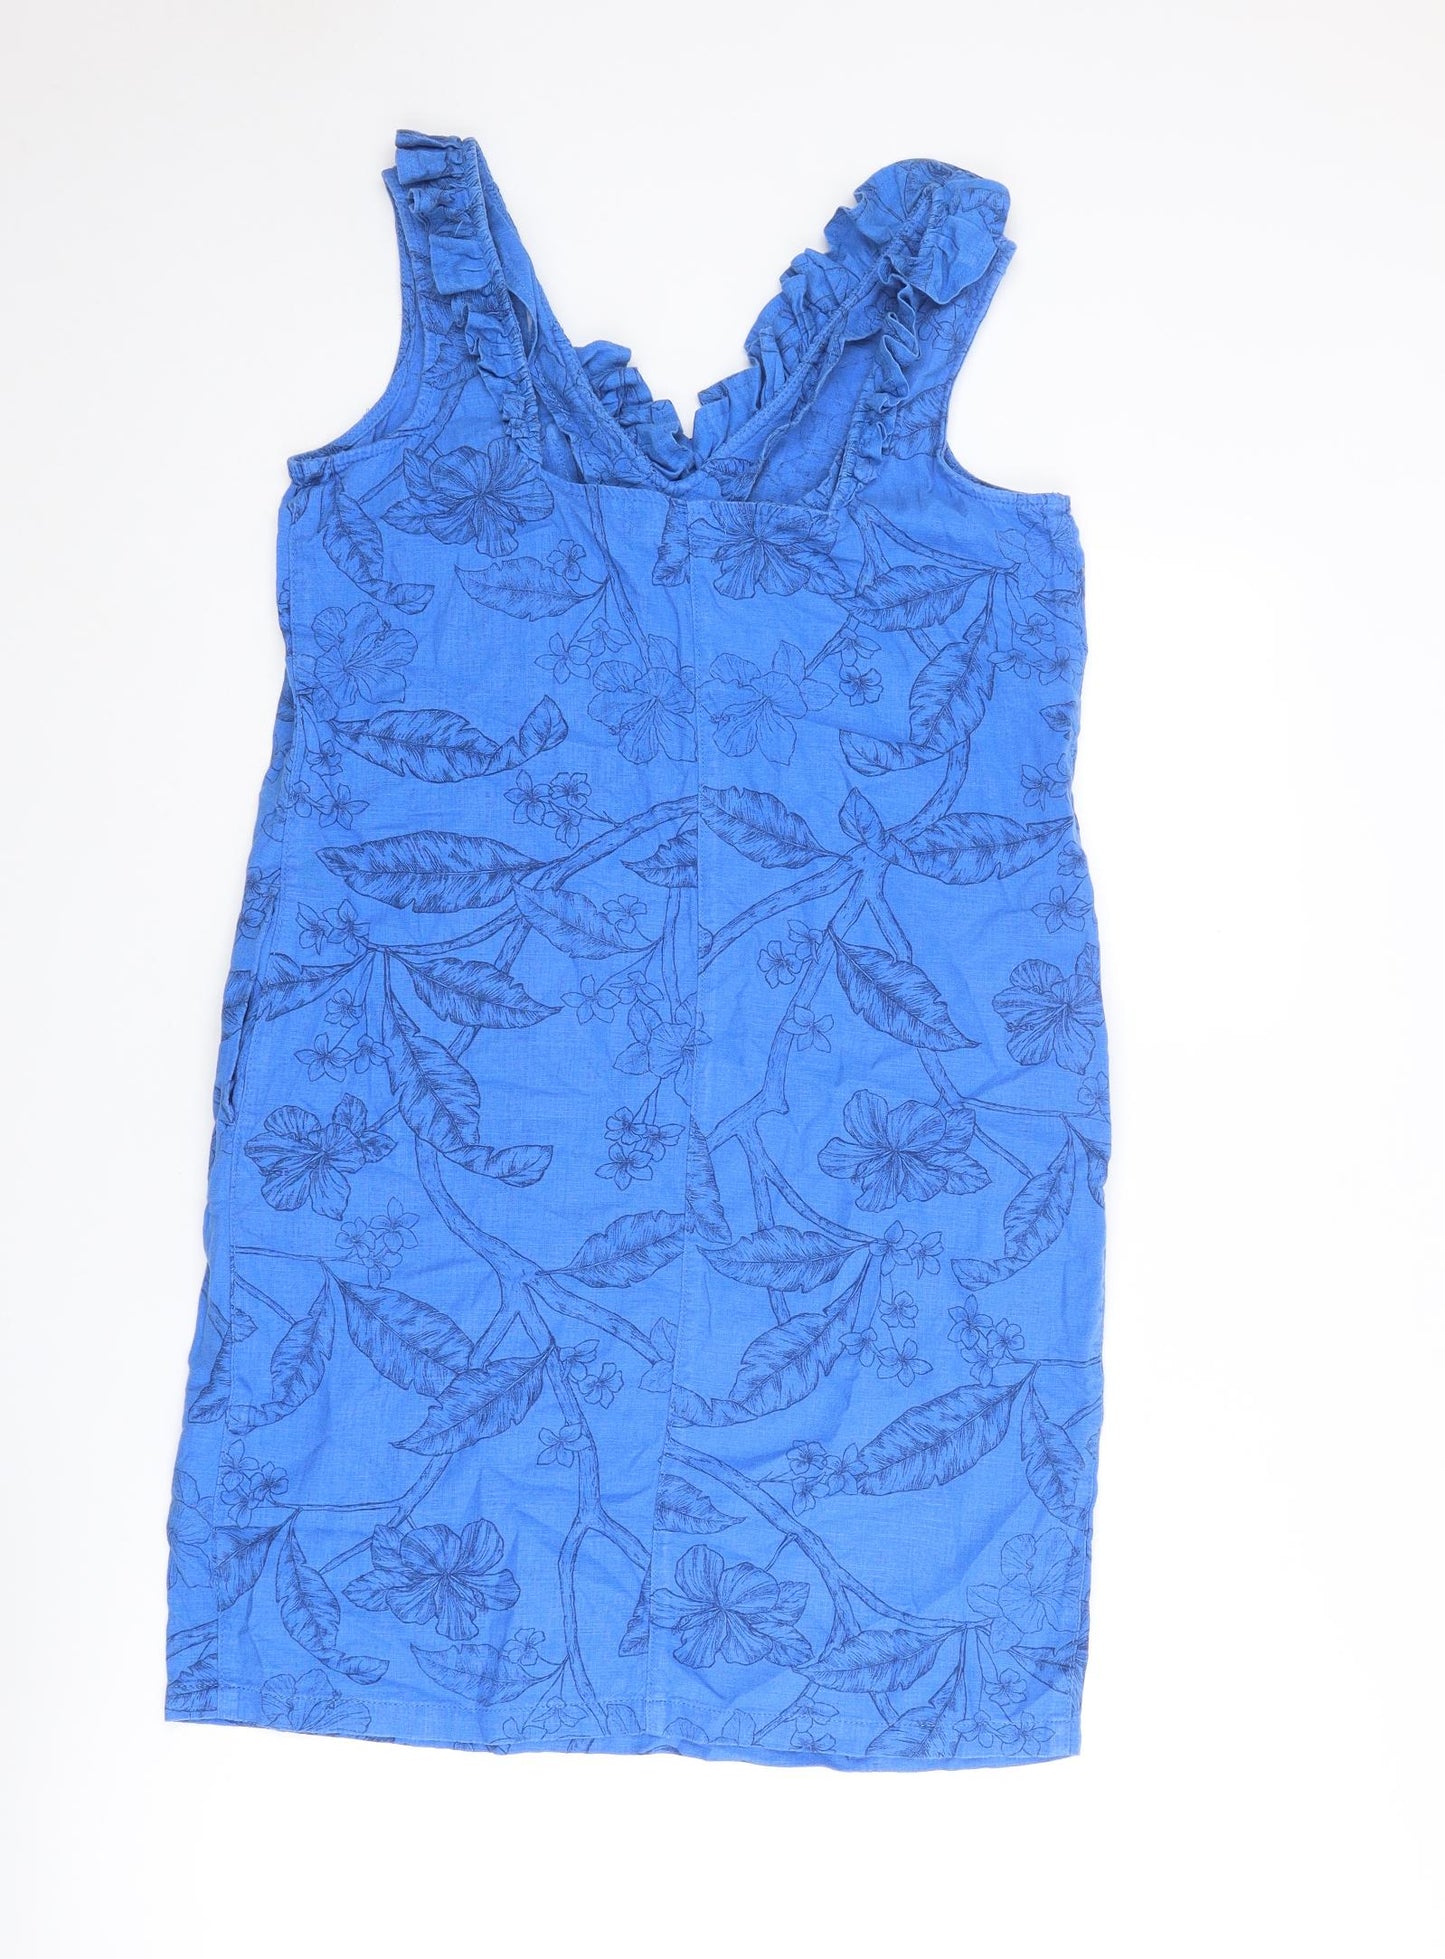 NEXT Womens Blue Floral Linen A-Line Size 8 V-Neck Pullover